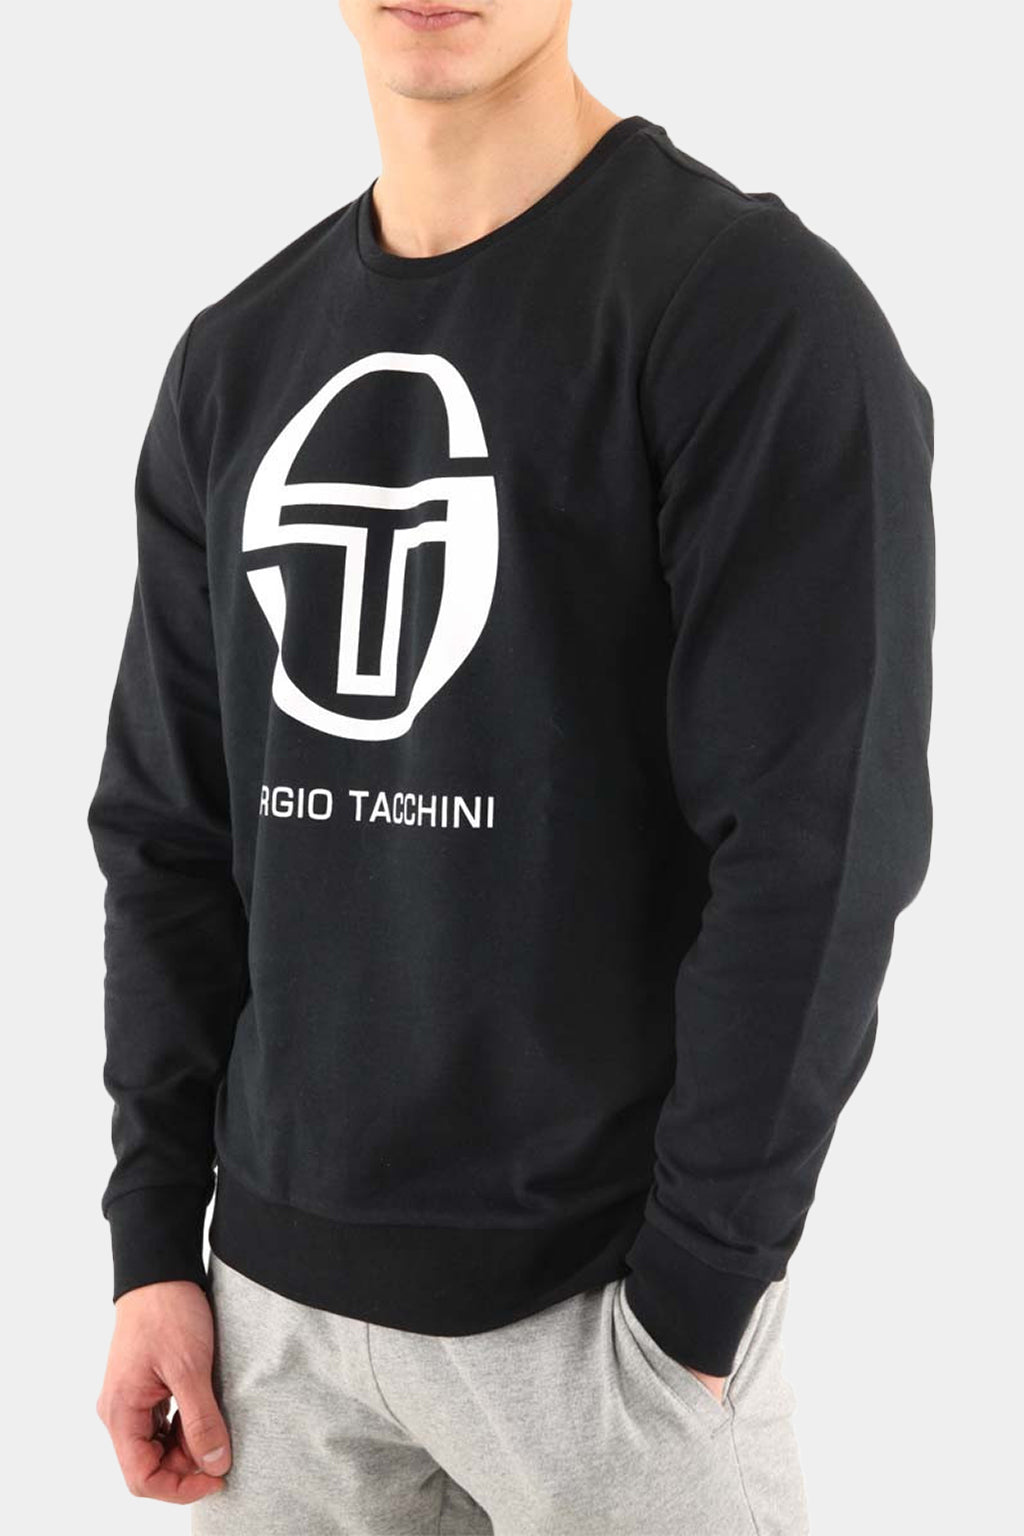 Sergio Tacchini - Men's Brand Logo Long Sleeve Sweater